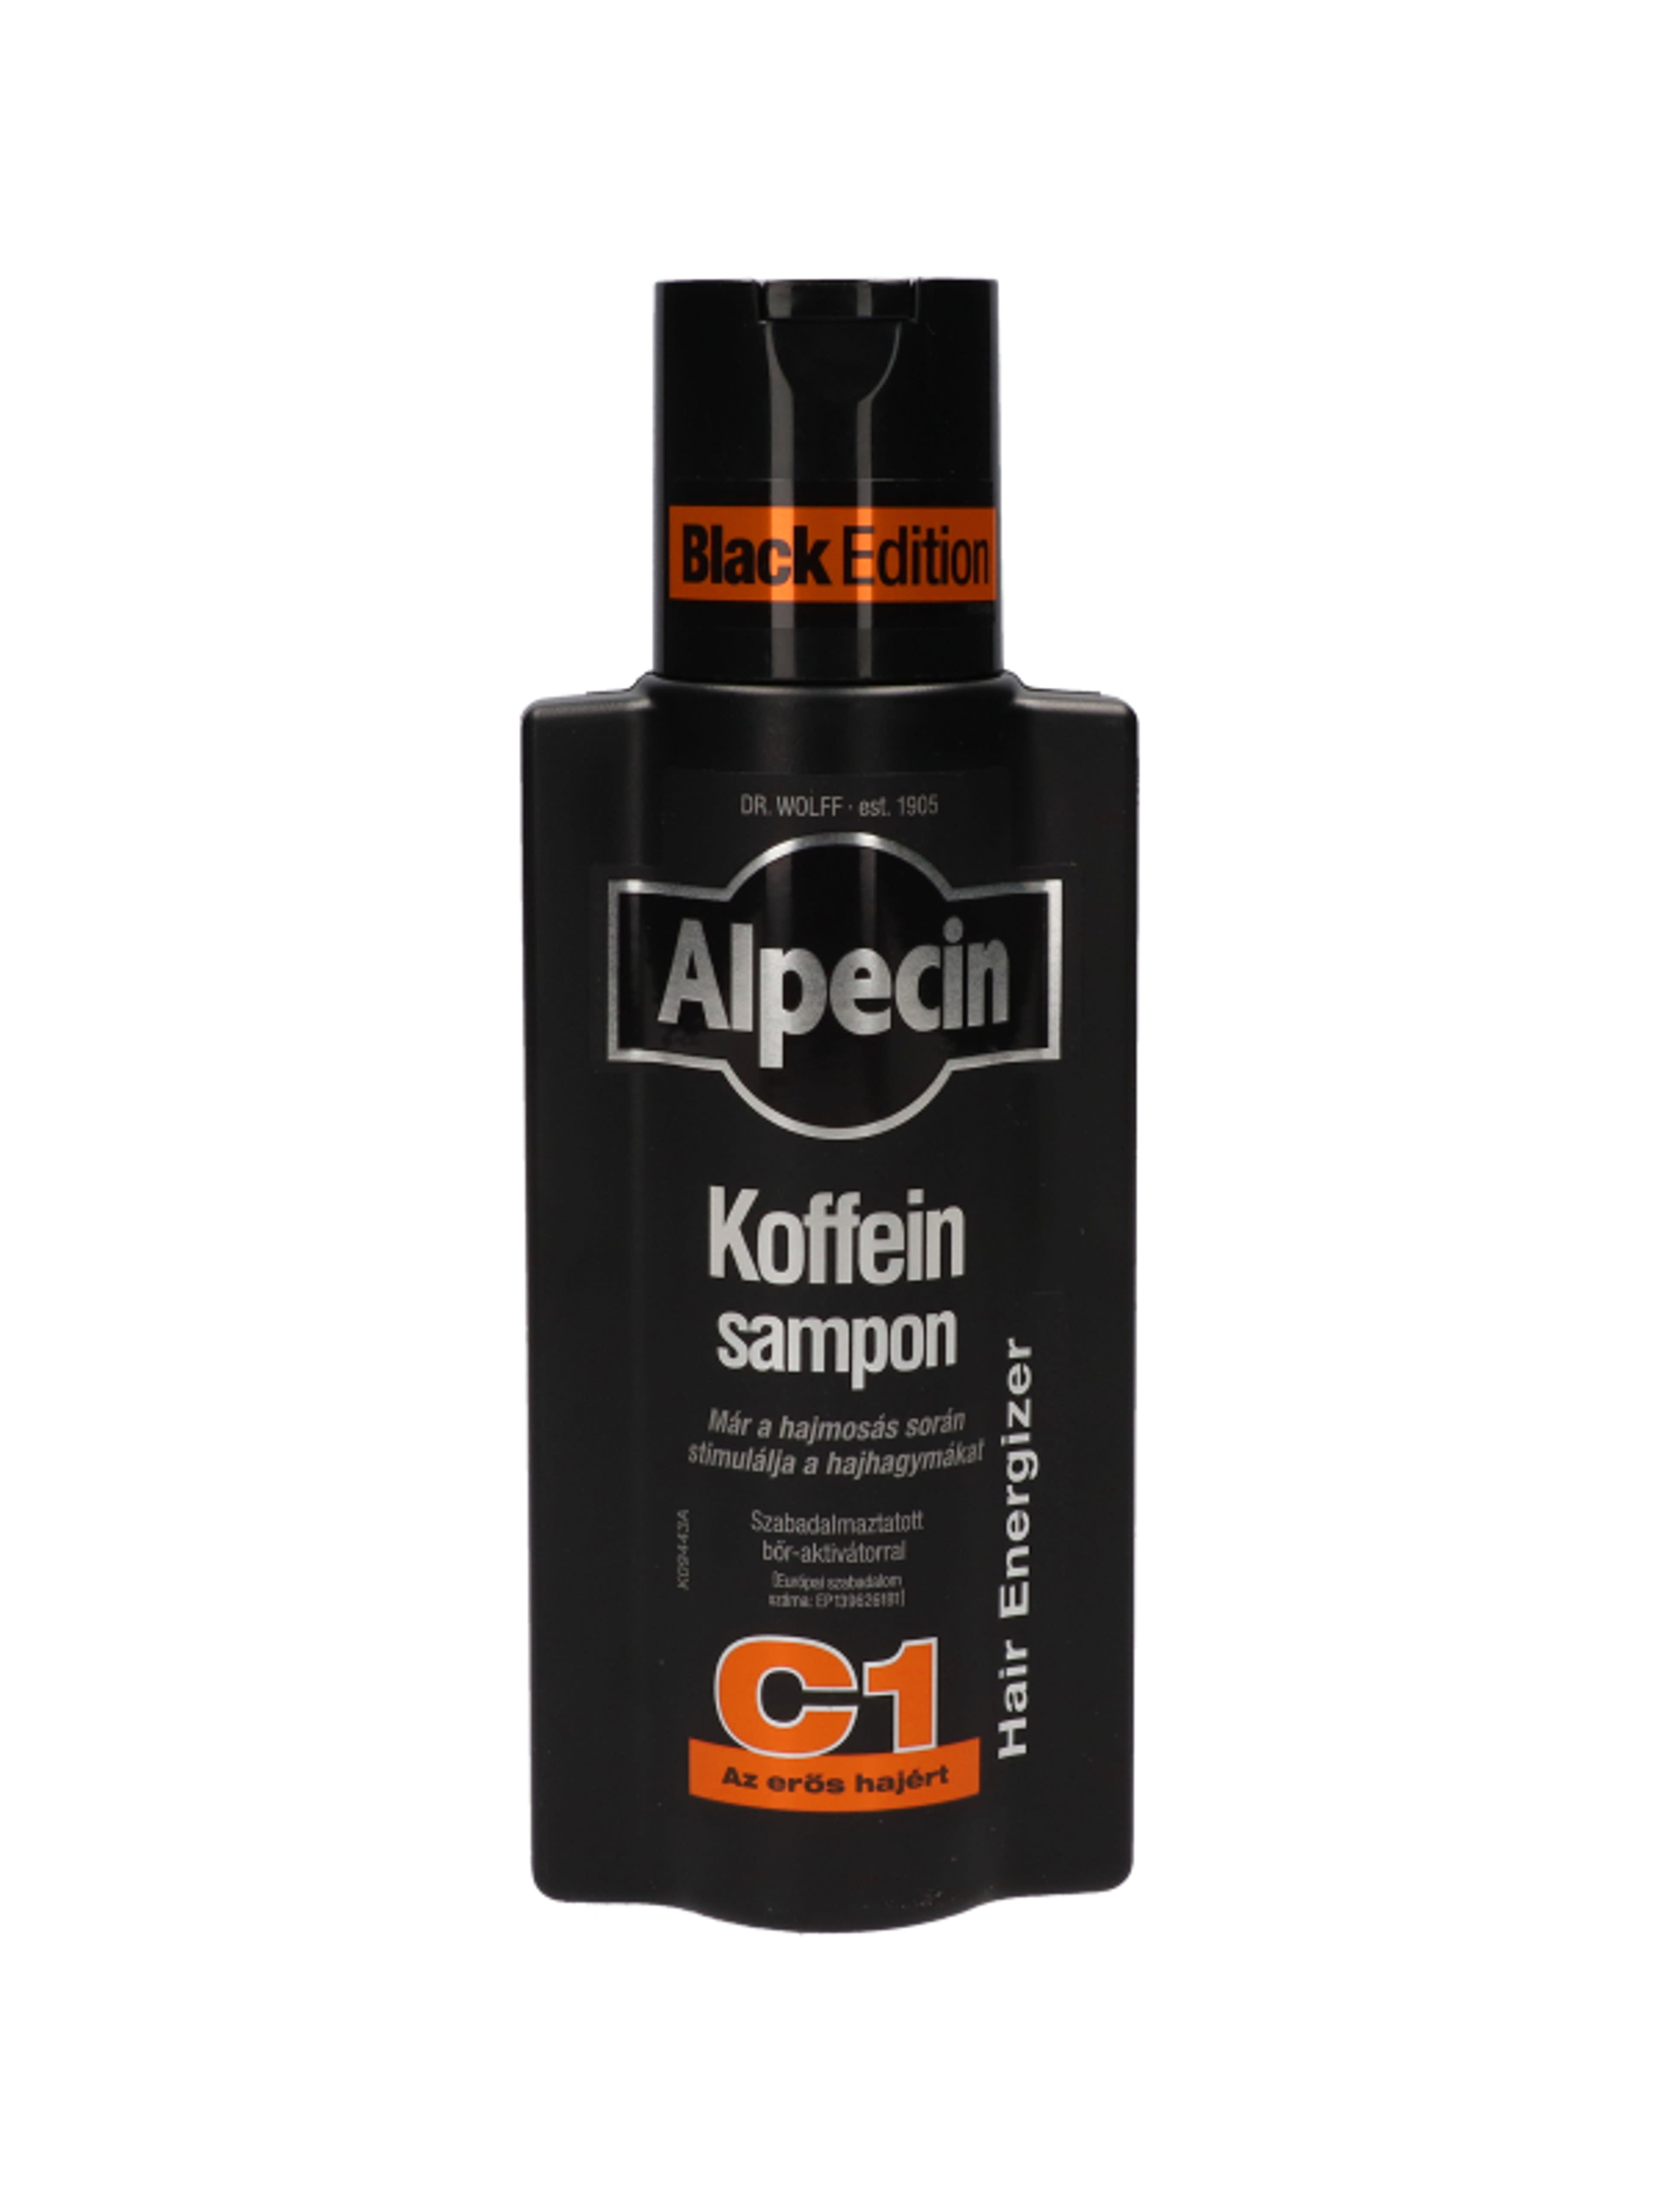 Alpecin C1 koffein sampon black edition - 250 ml-1